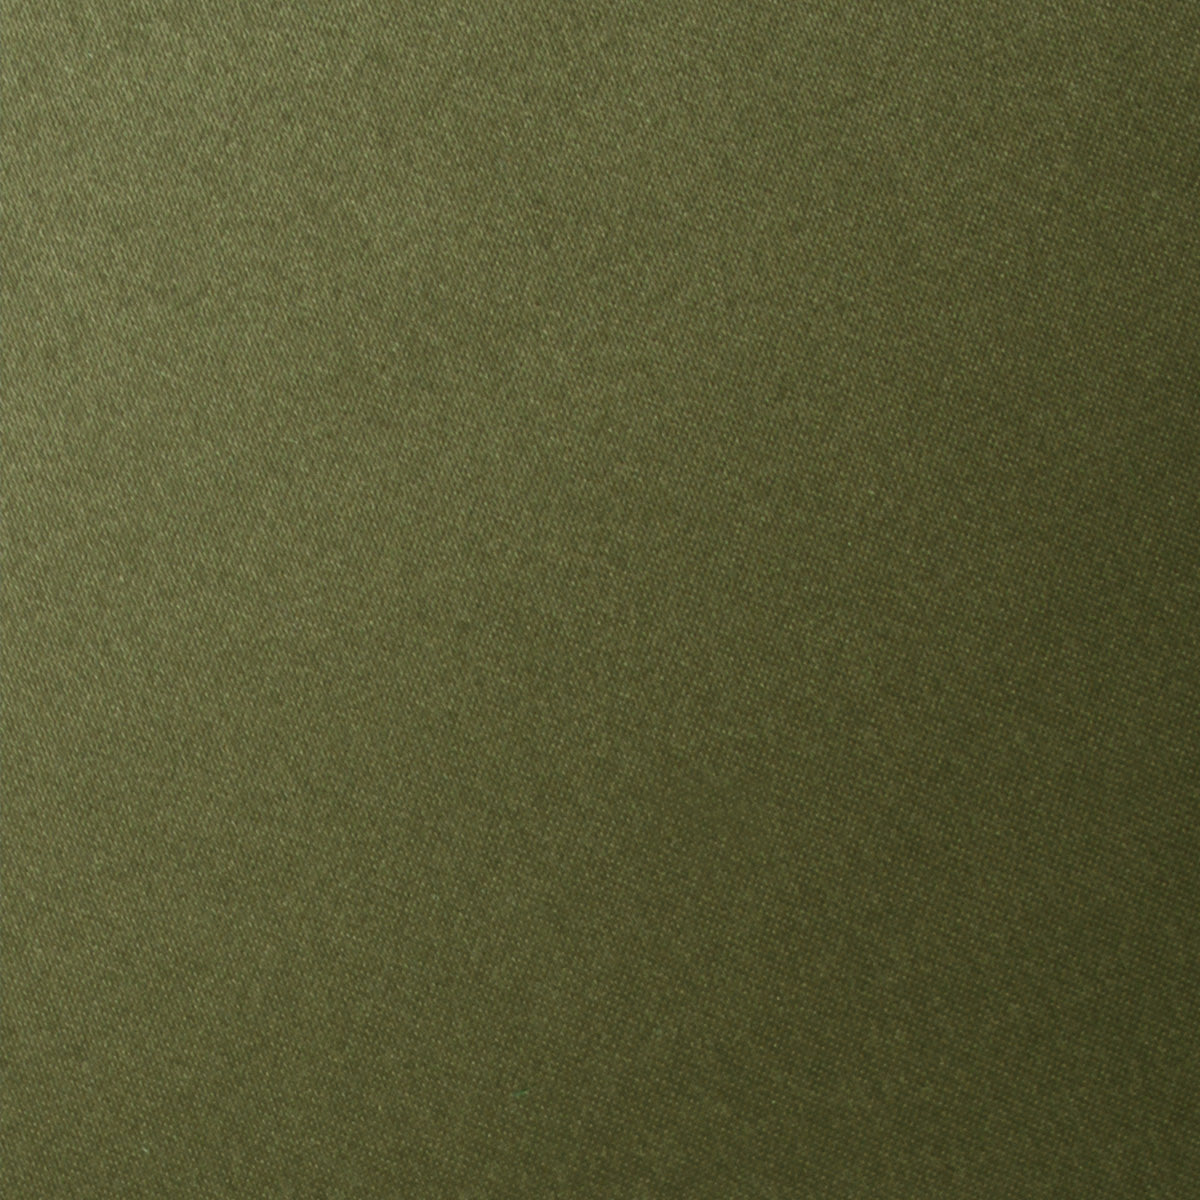 Olive Green Satin Skinny Tie Fabric